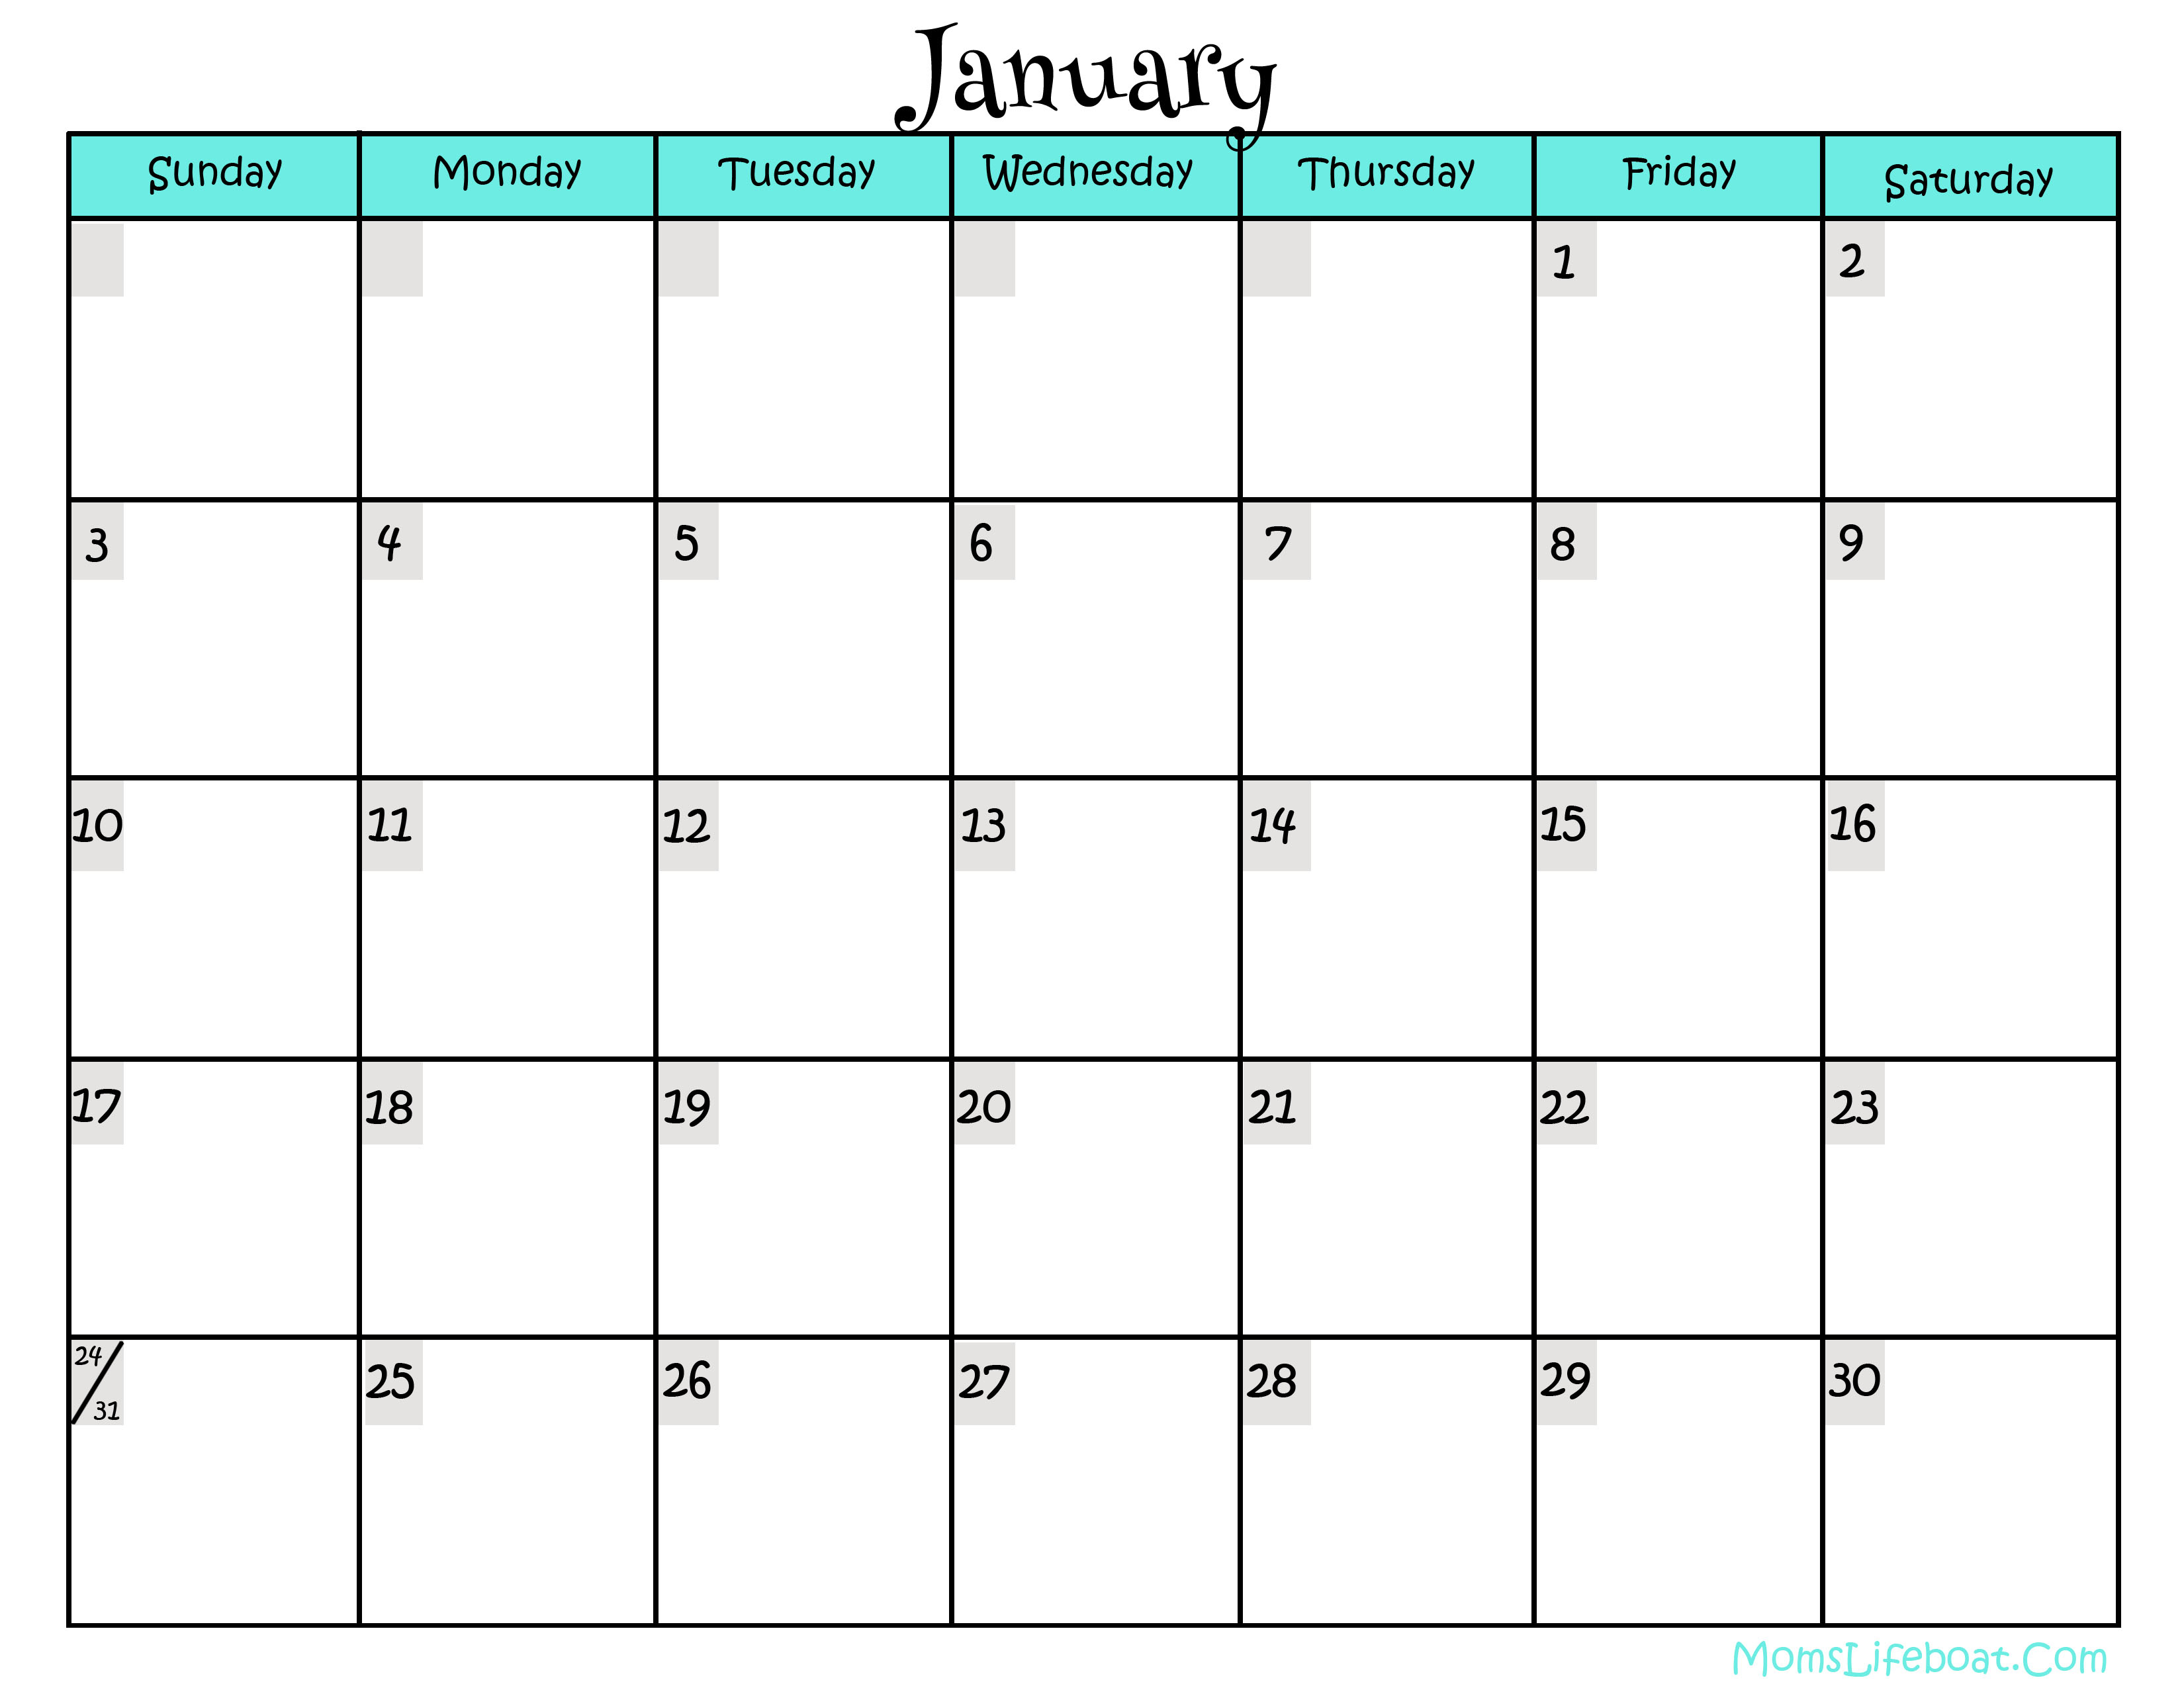 Free Calendars To Print - Wpa.wpart.co